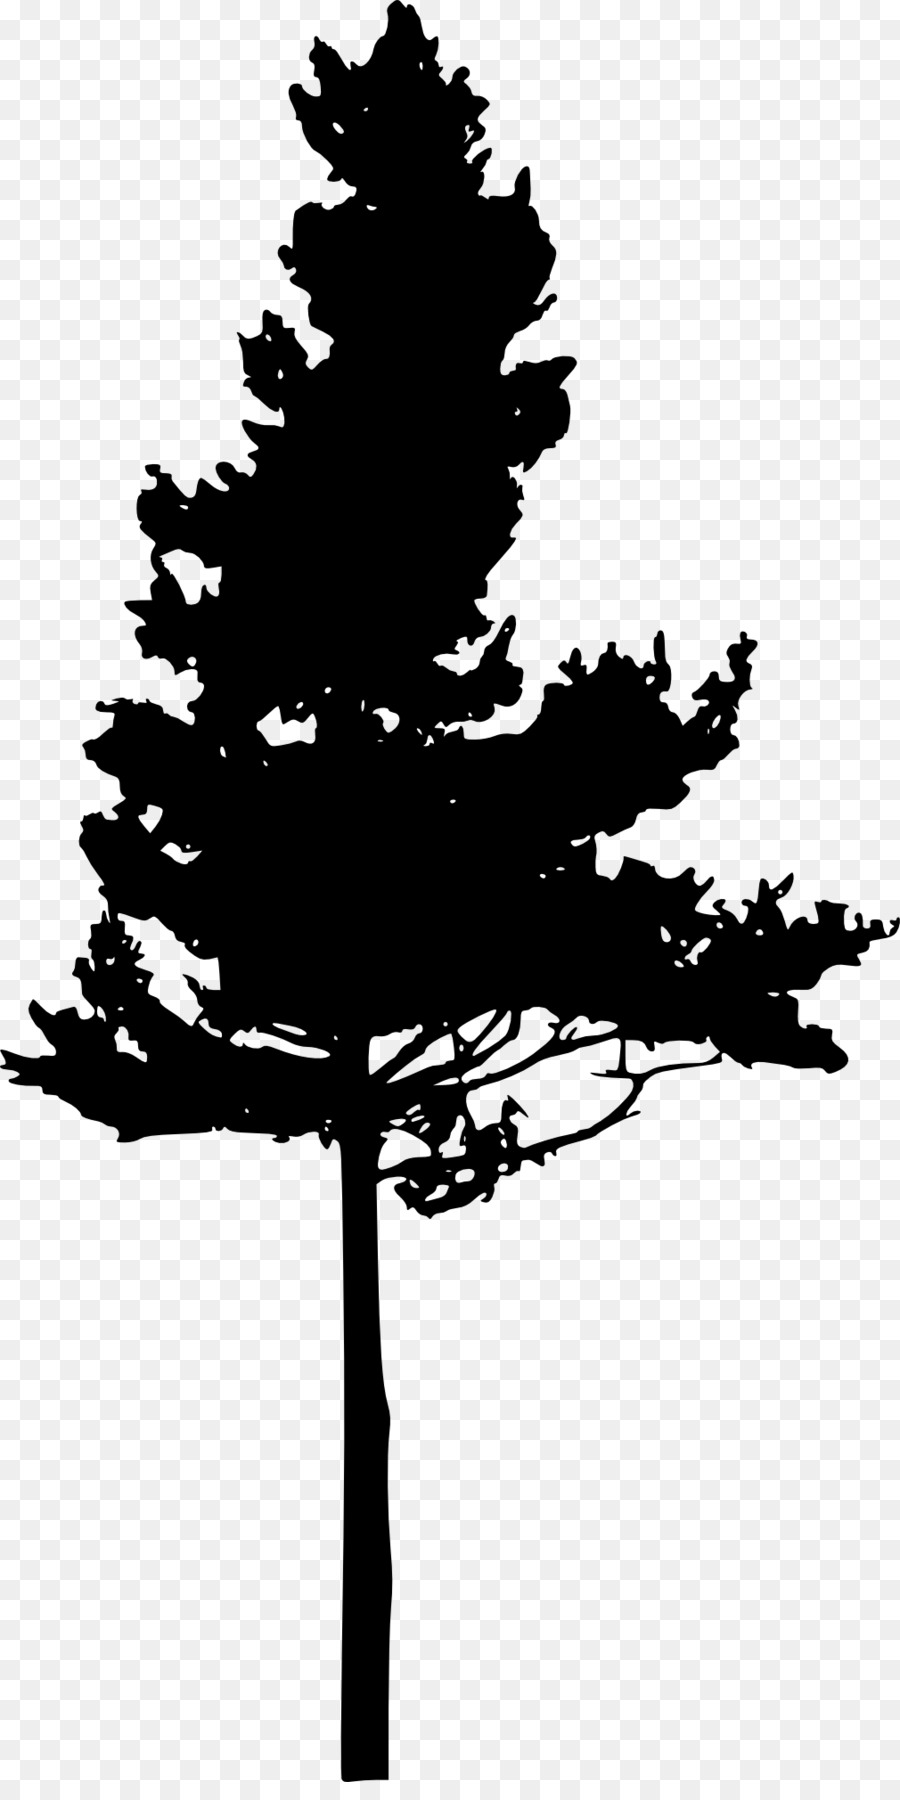 Silhouette Pine Clip art - silhouette of tree png download - 1010*2000 - Free Transparent Silhouette png Download.